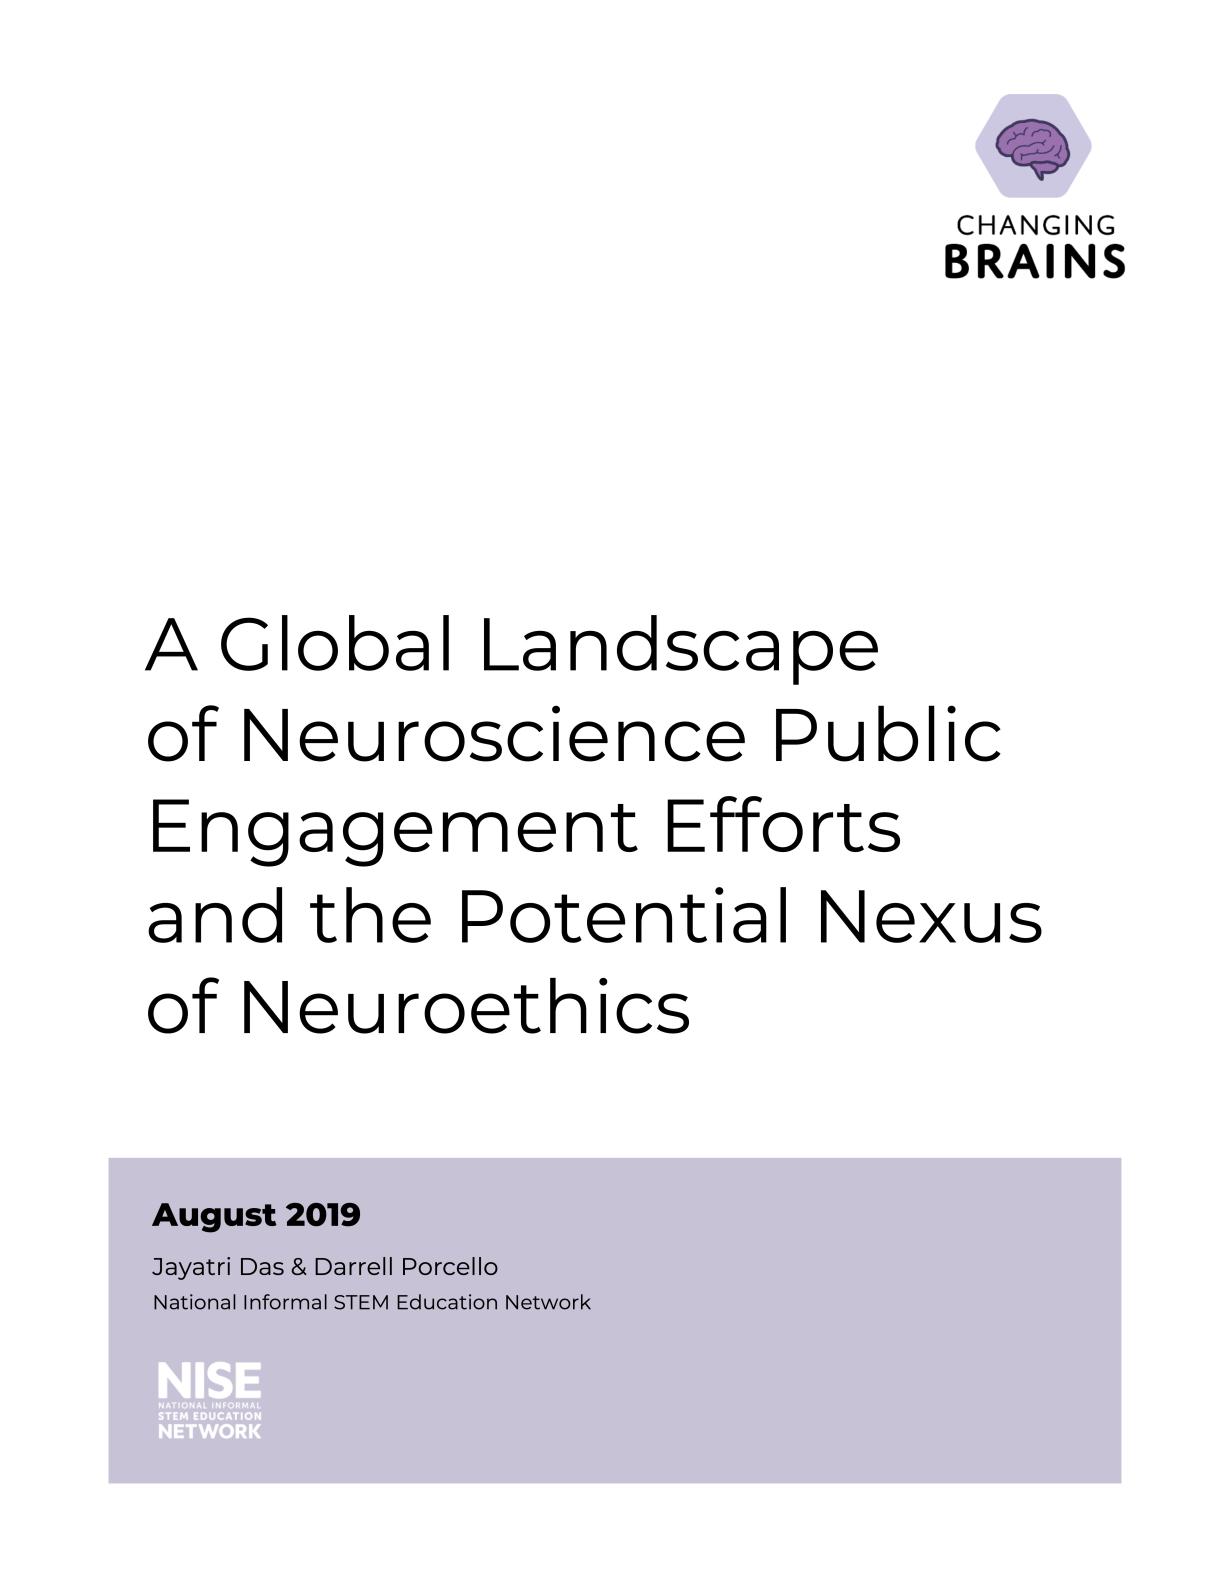 Das & Porcello 2019 A Global Landscape of Neuroscience Public Engagement efforts Cover